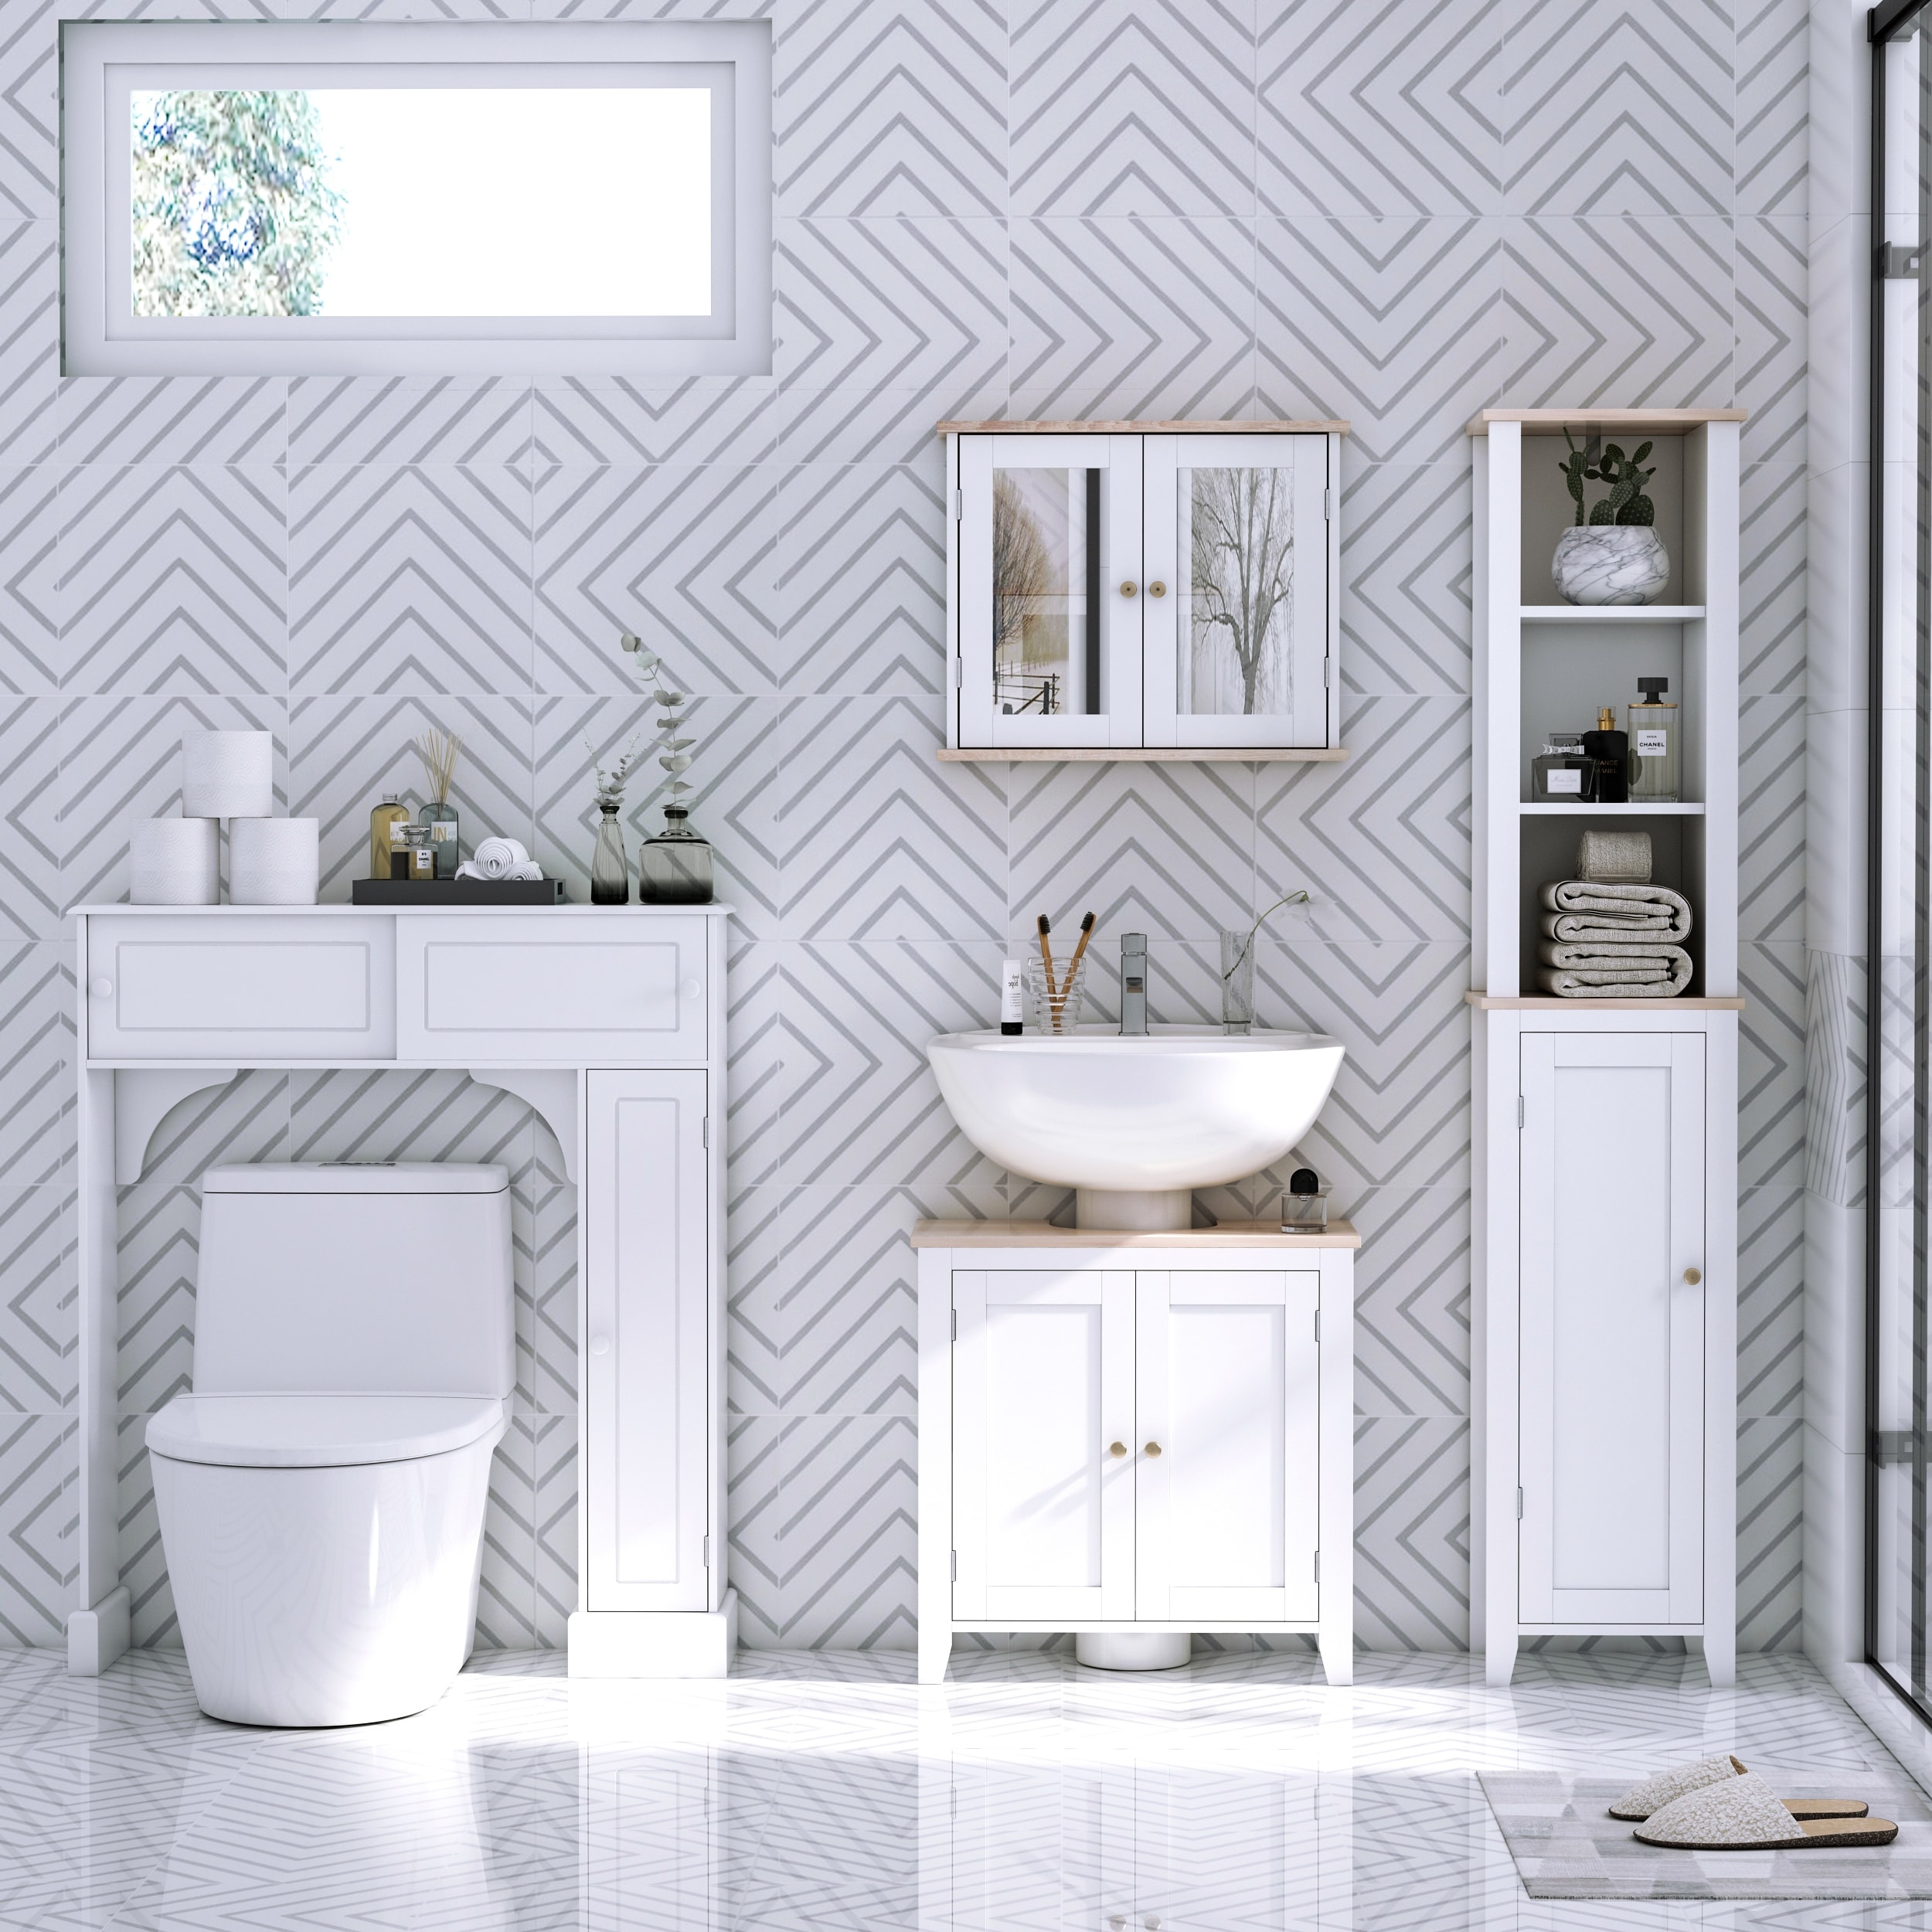 https://ak1.ostkcdn.com/images/products/is/images/direct/5627faaefb96b350f9100d7777b7e9c4e7b726c1/HomCom-Freestanding-Over-Toilet-Bathroom-Storage-Cabinet---White.jpg